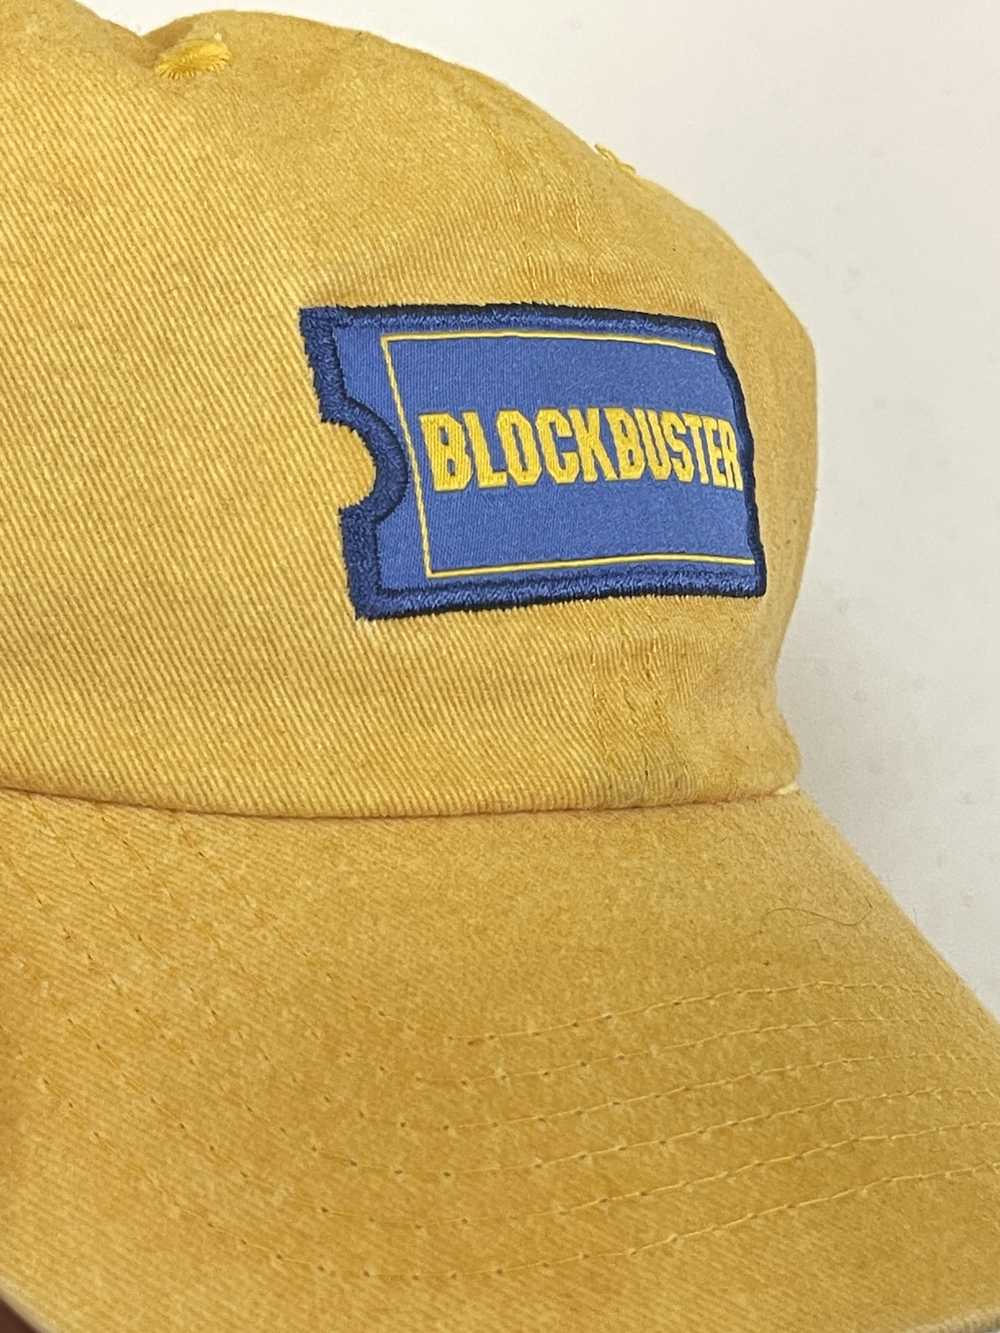 Vintage Rare Vintage Blockbuster Hat Streetwear - image 2